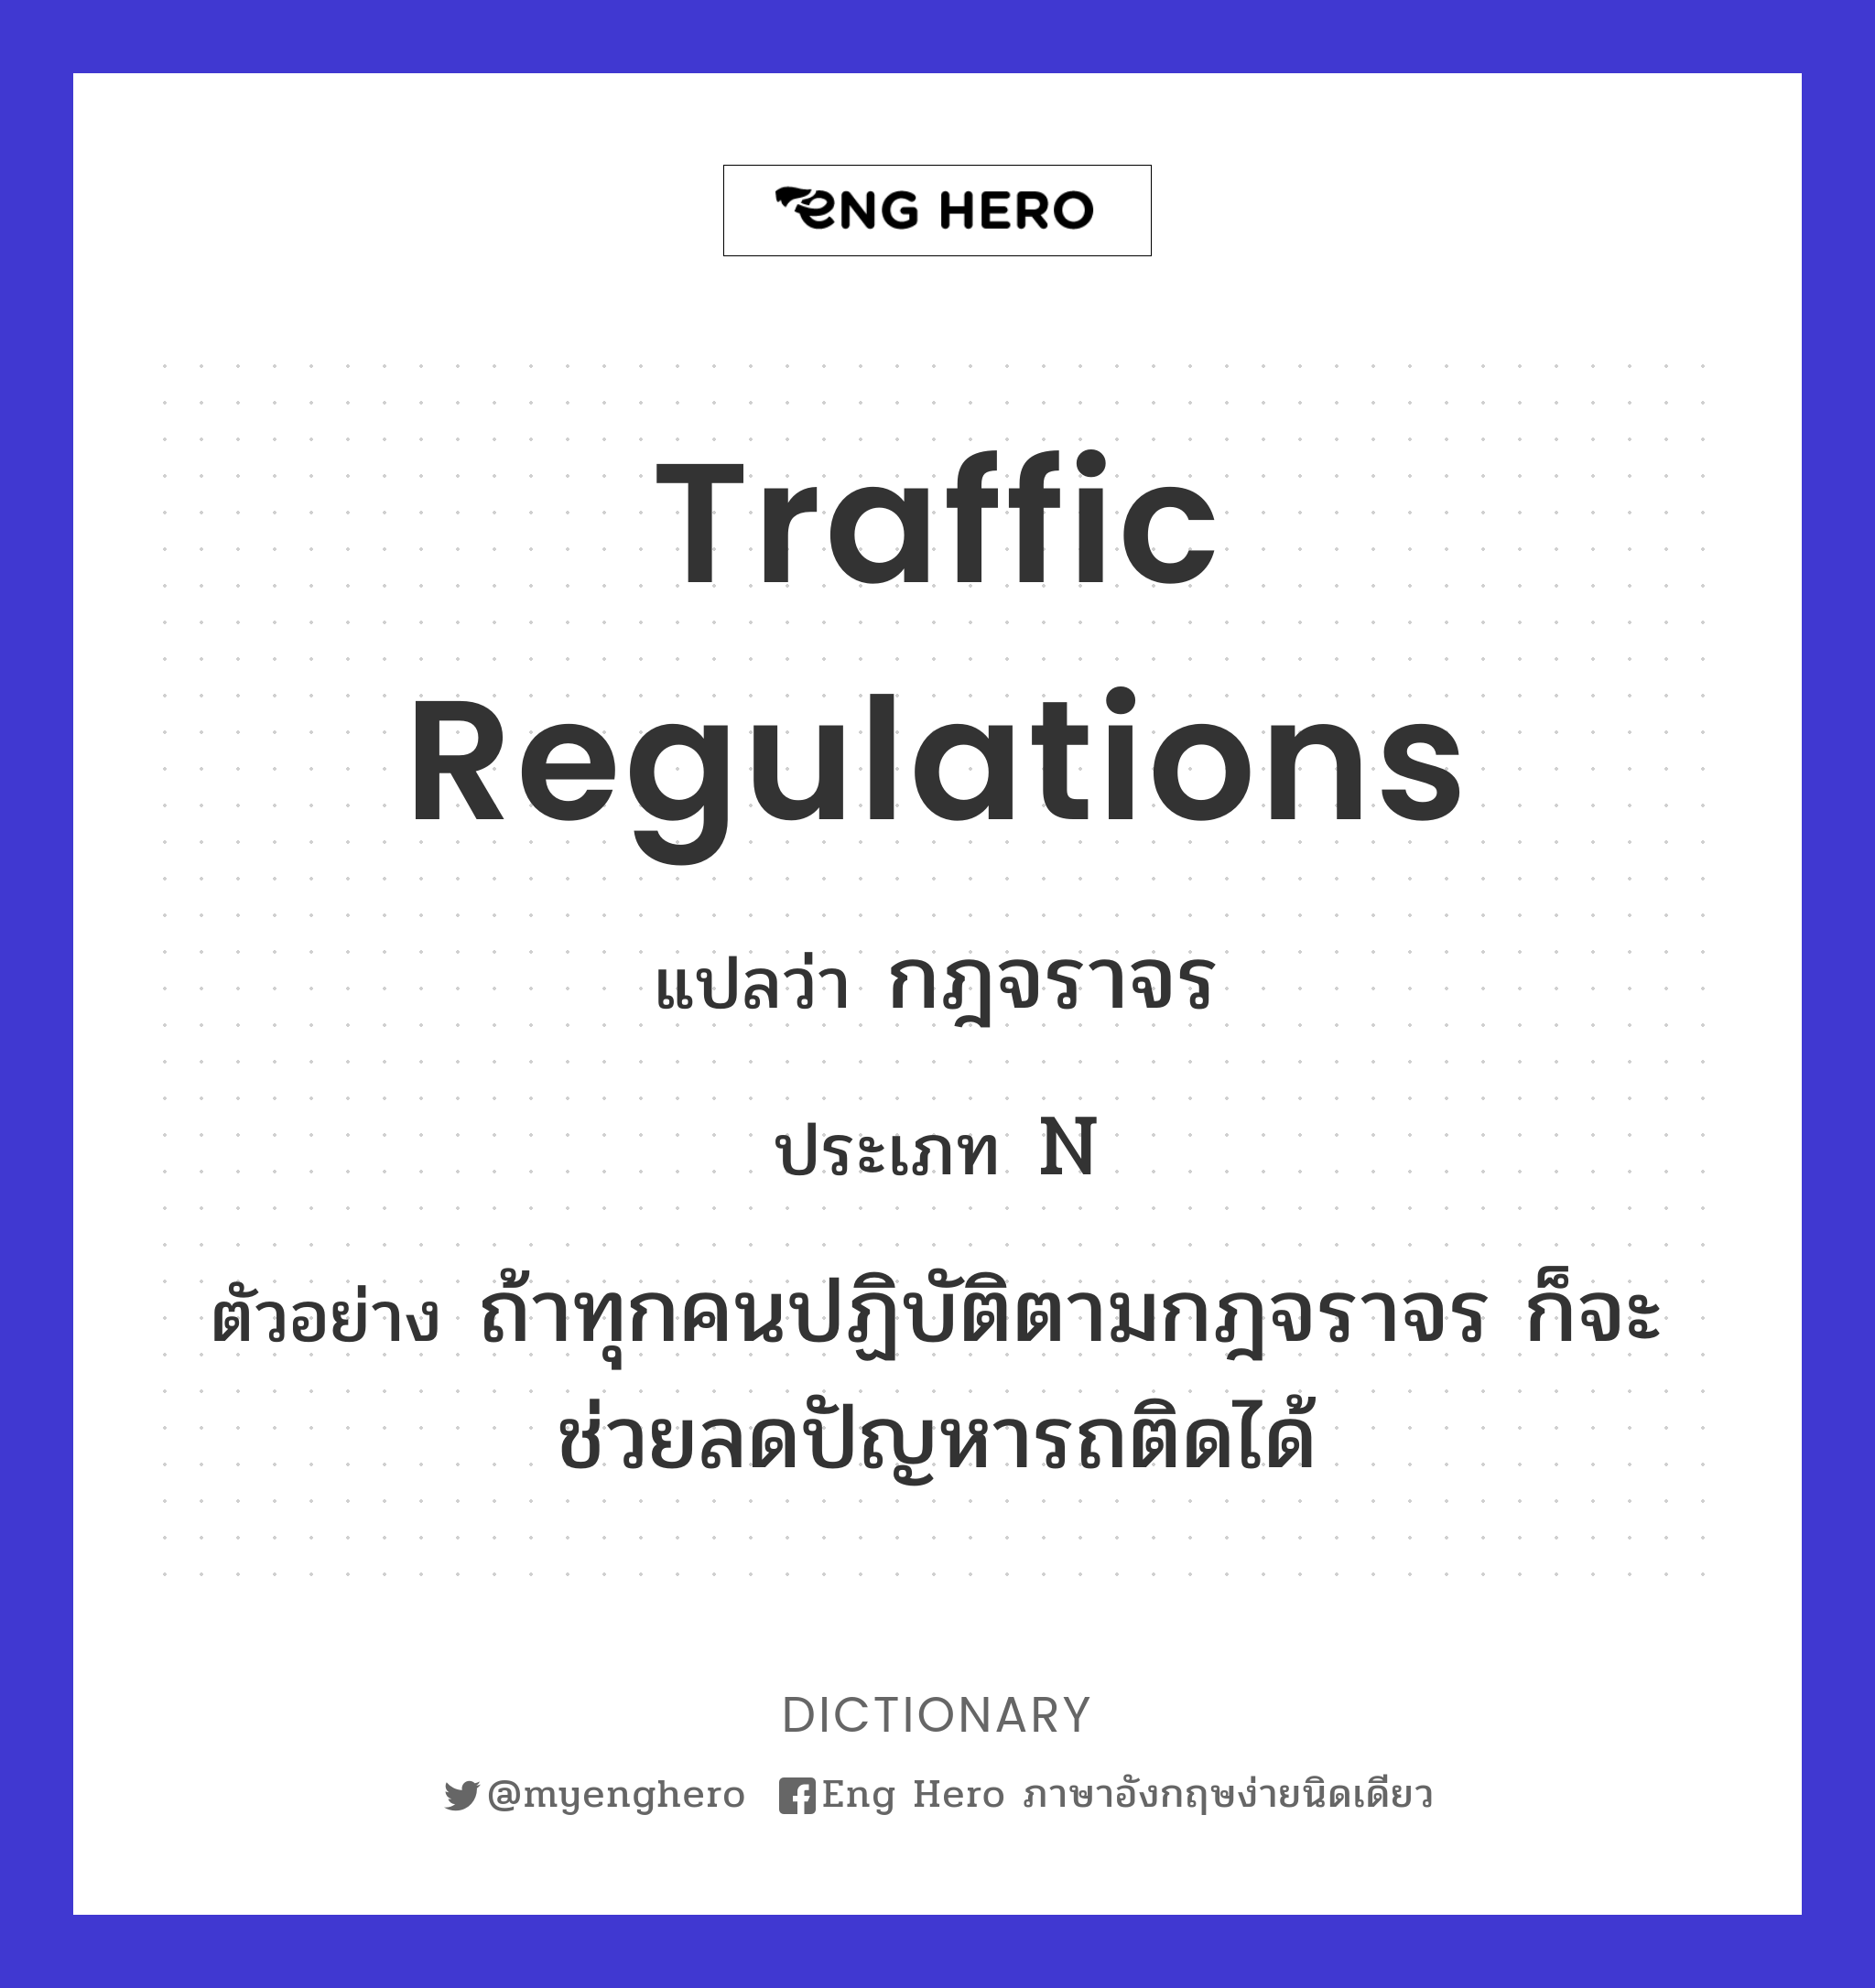 traffic regulations